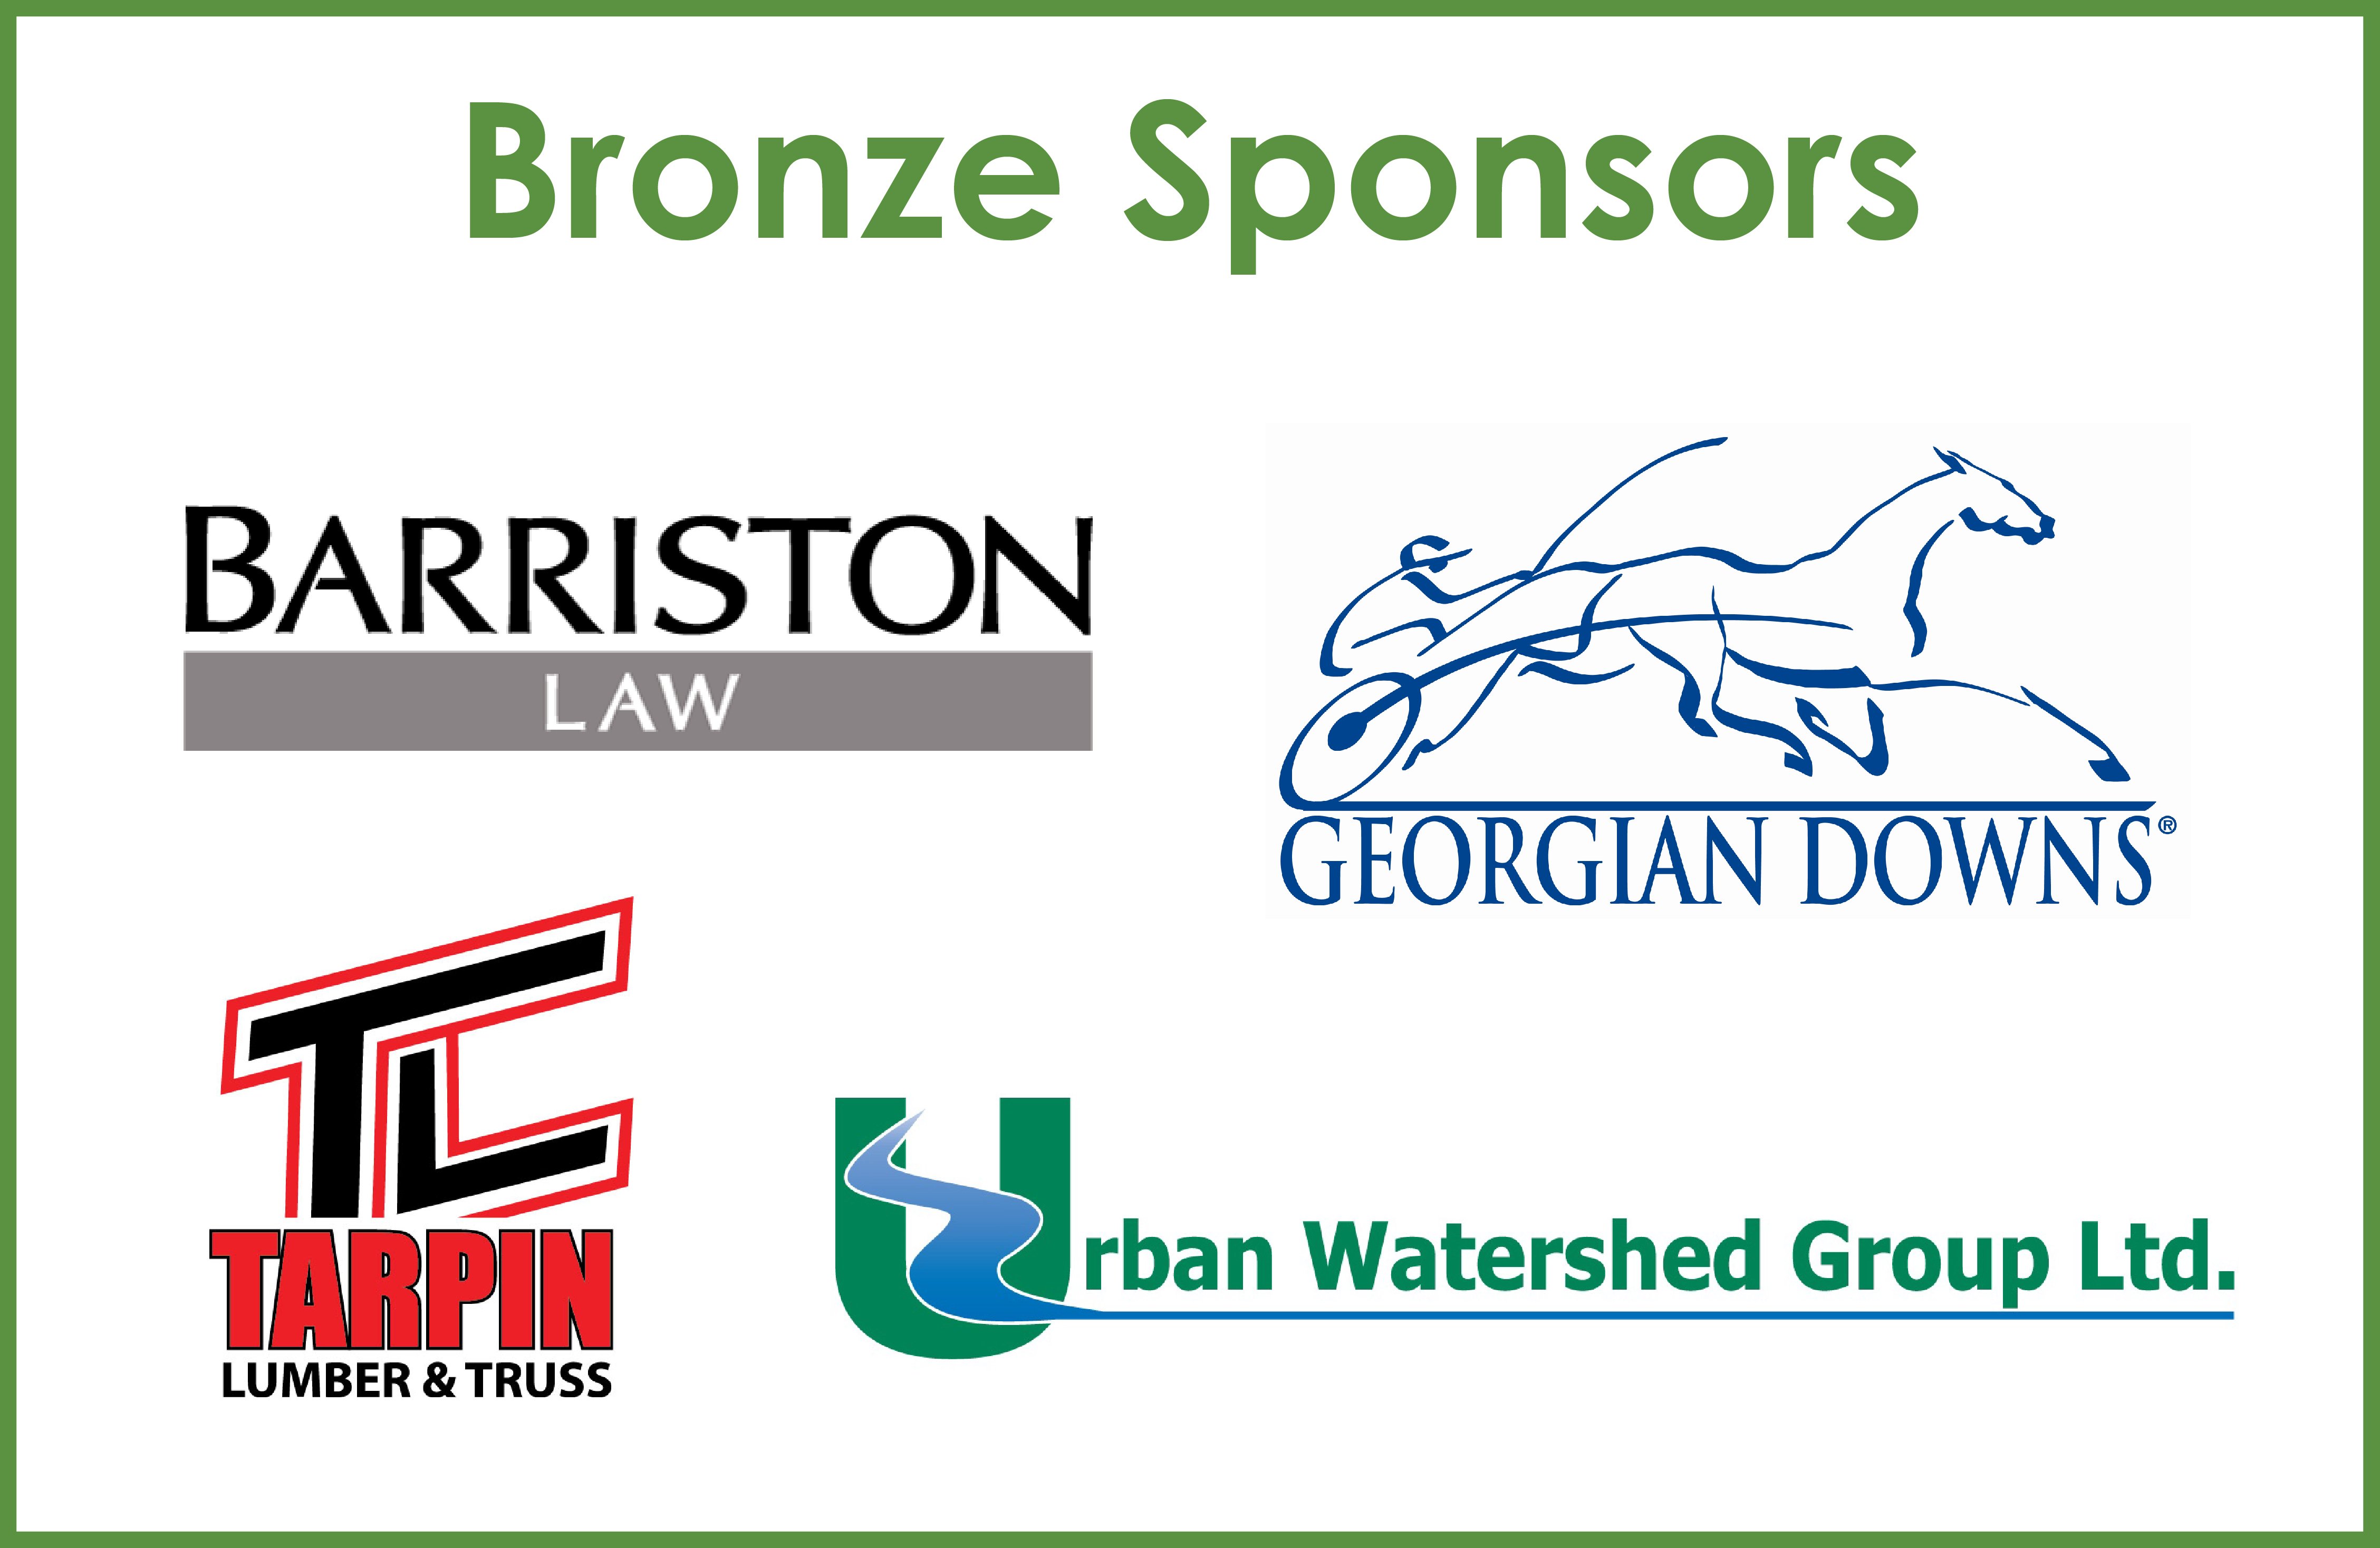 Bronze sponsor logos